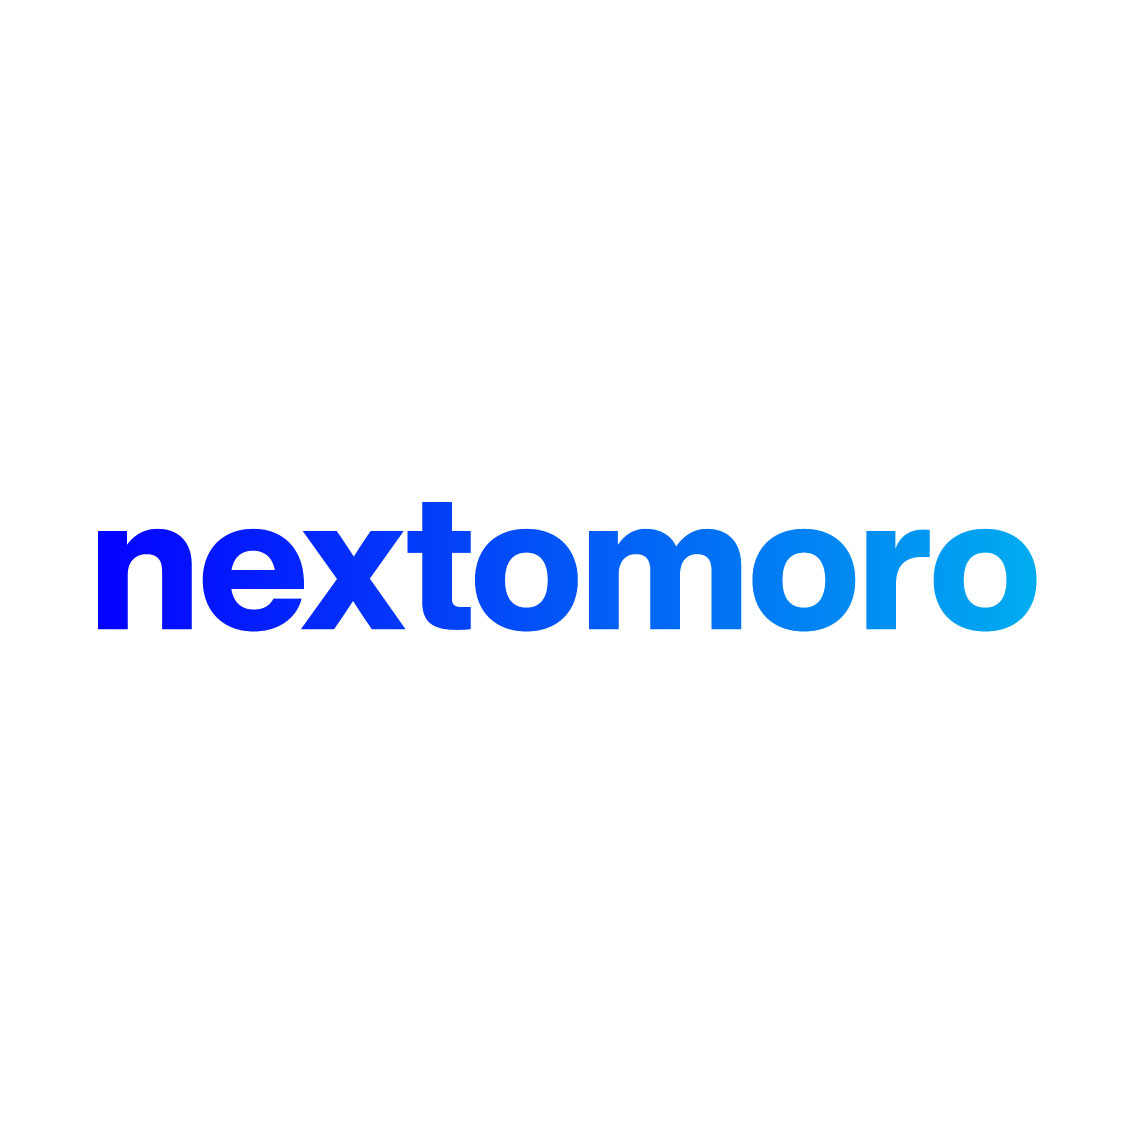 Nextomoro - Artificial Intelligence News & Reviews